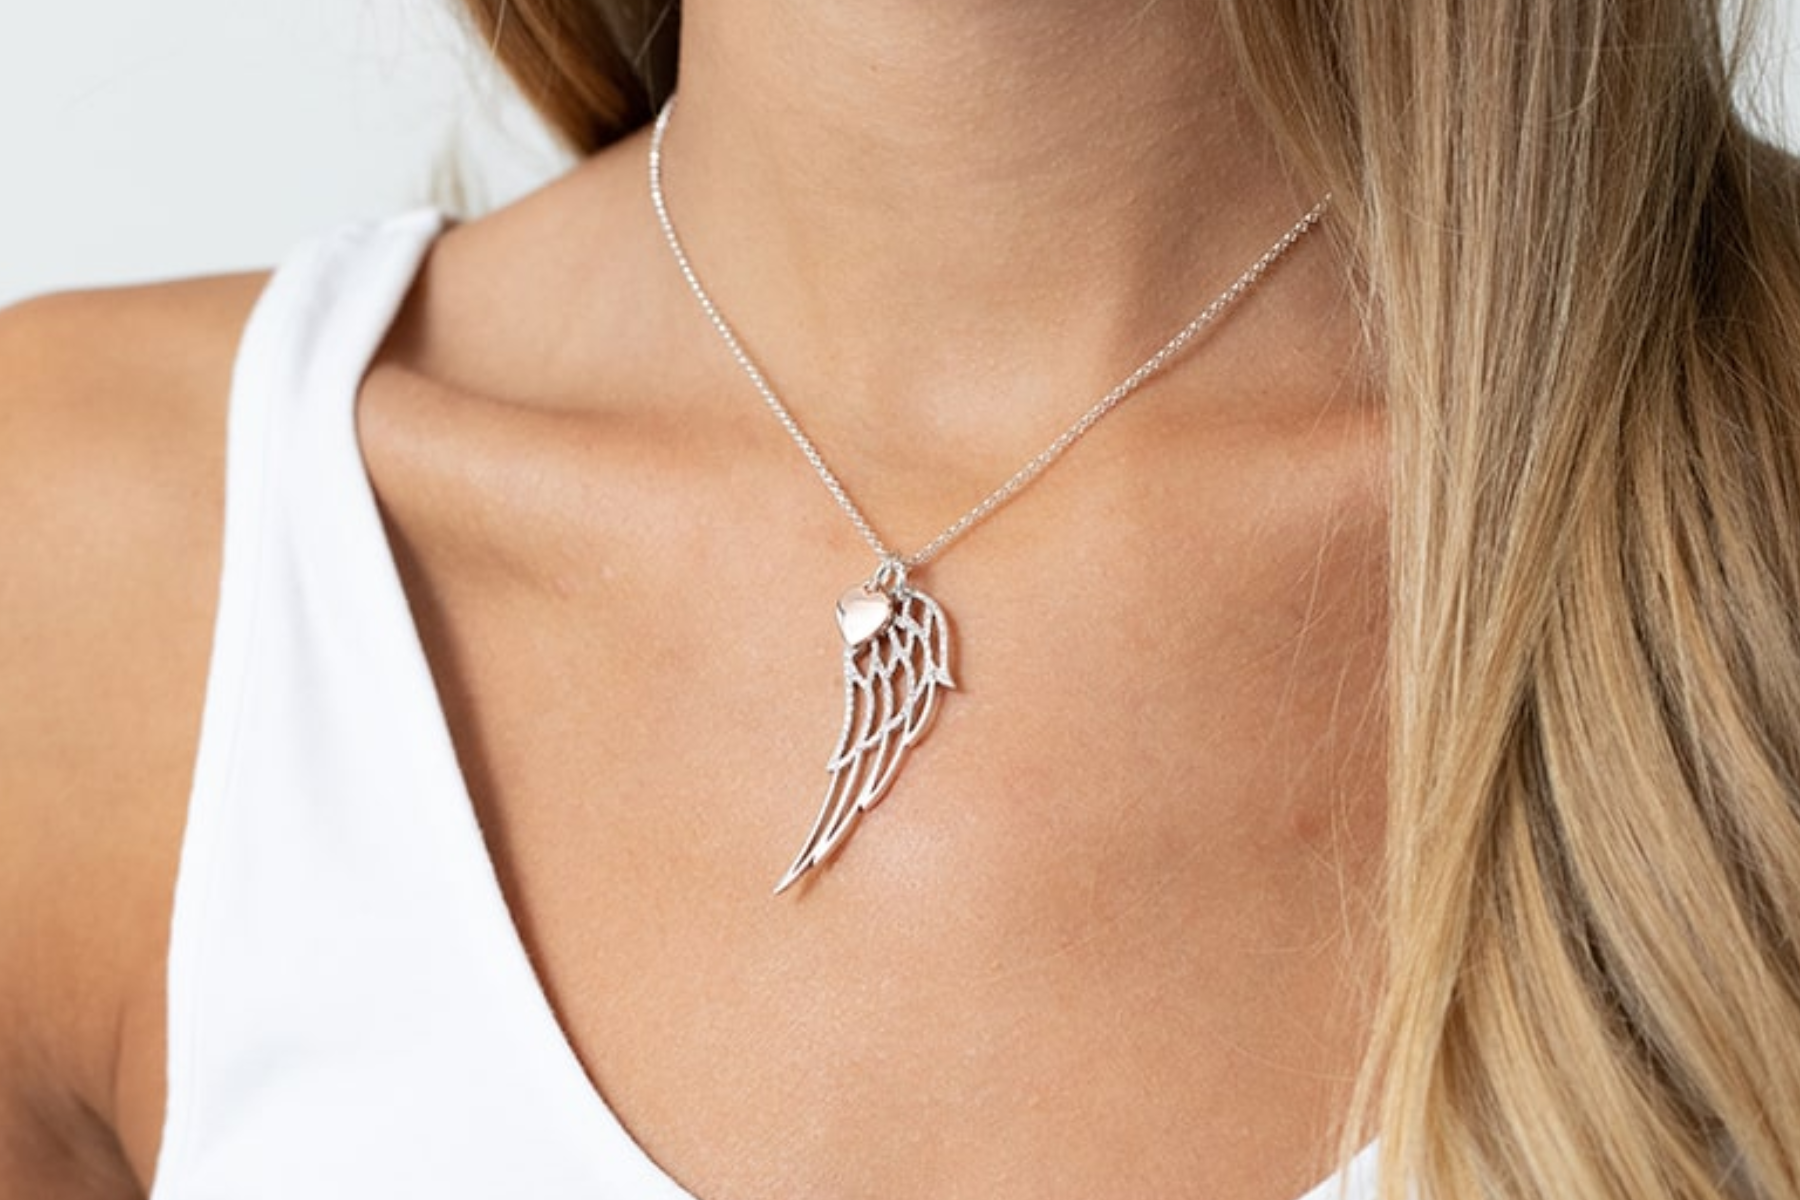 A lady wearing an angel wing pendant